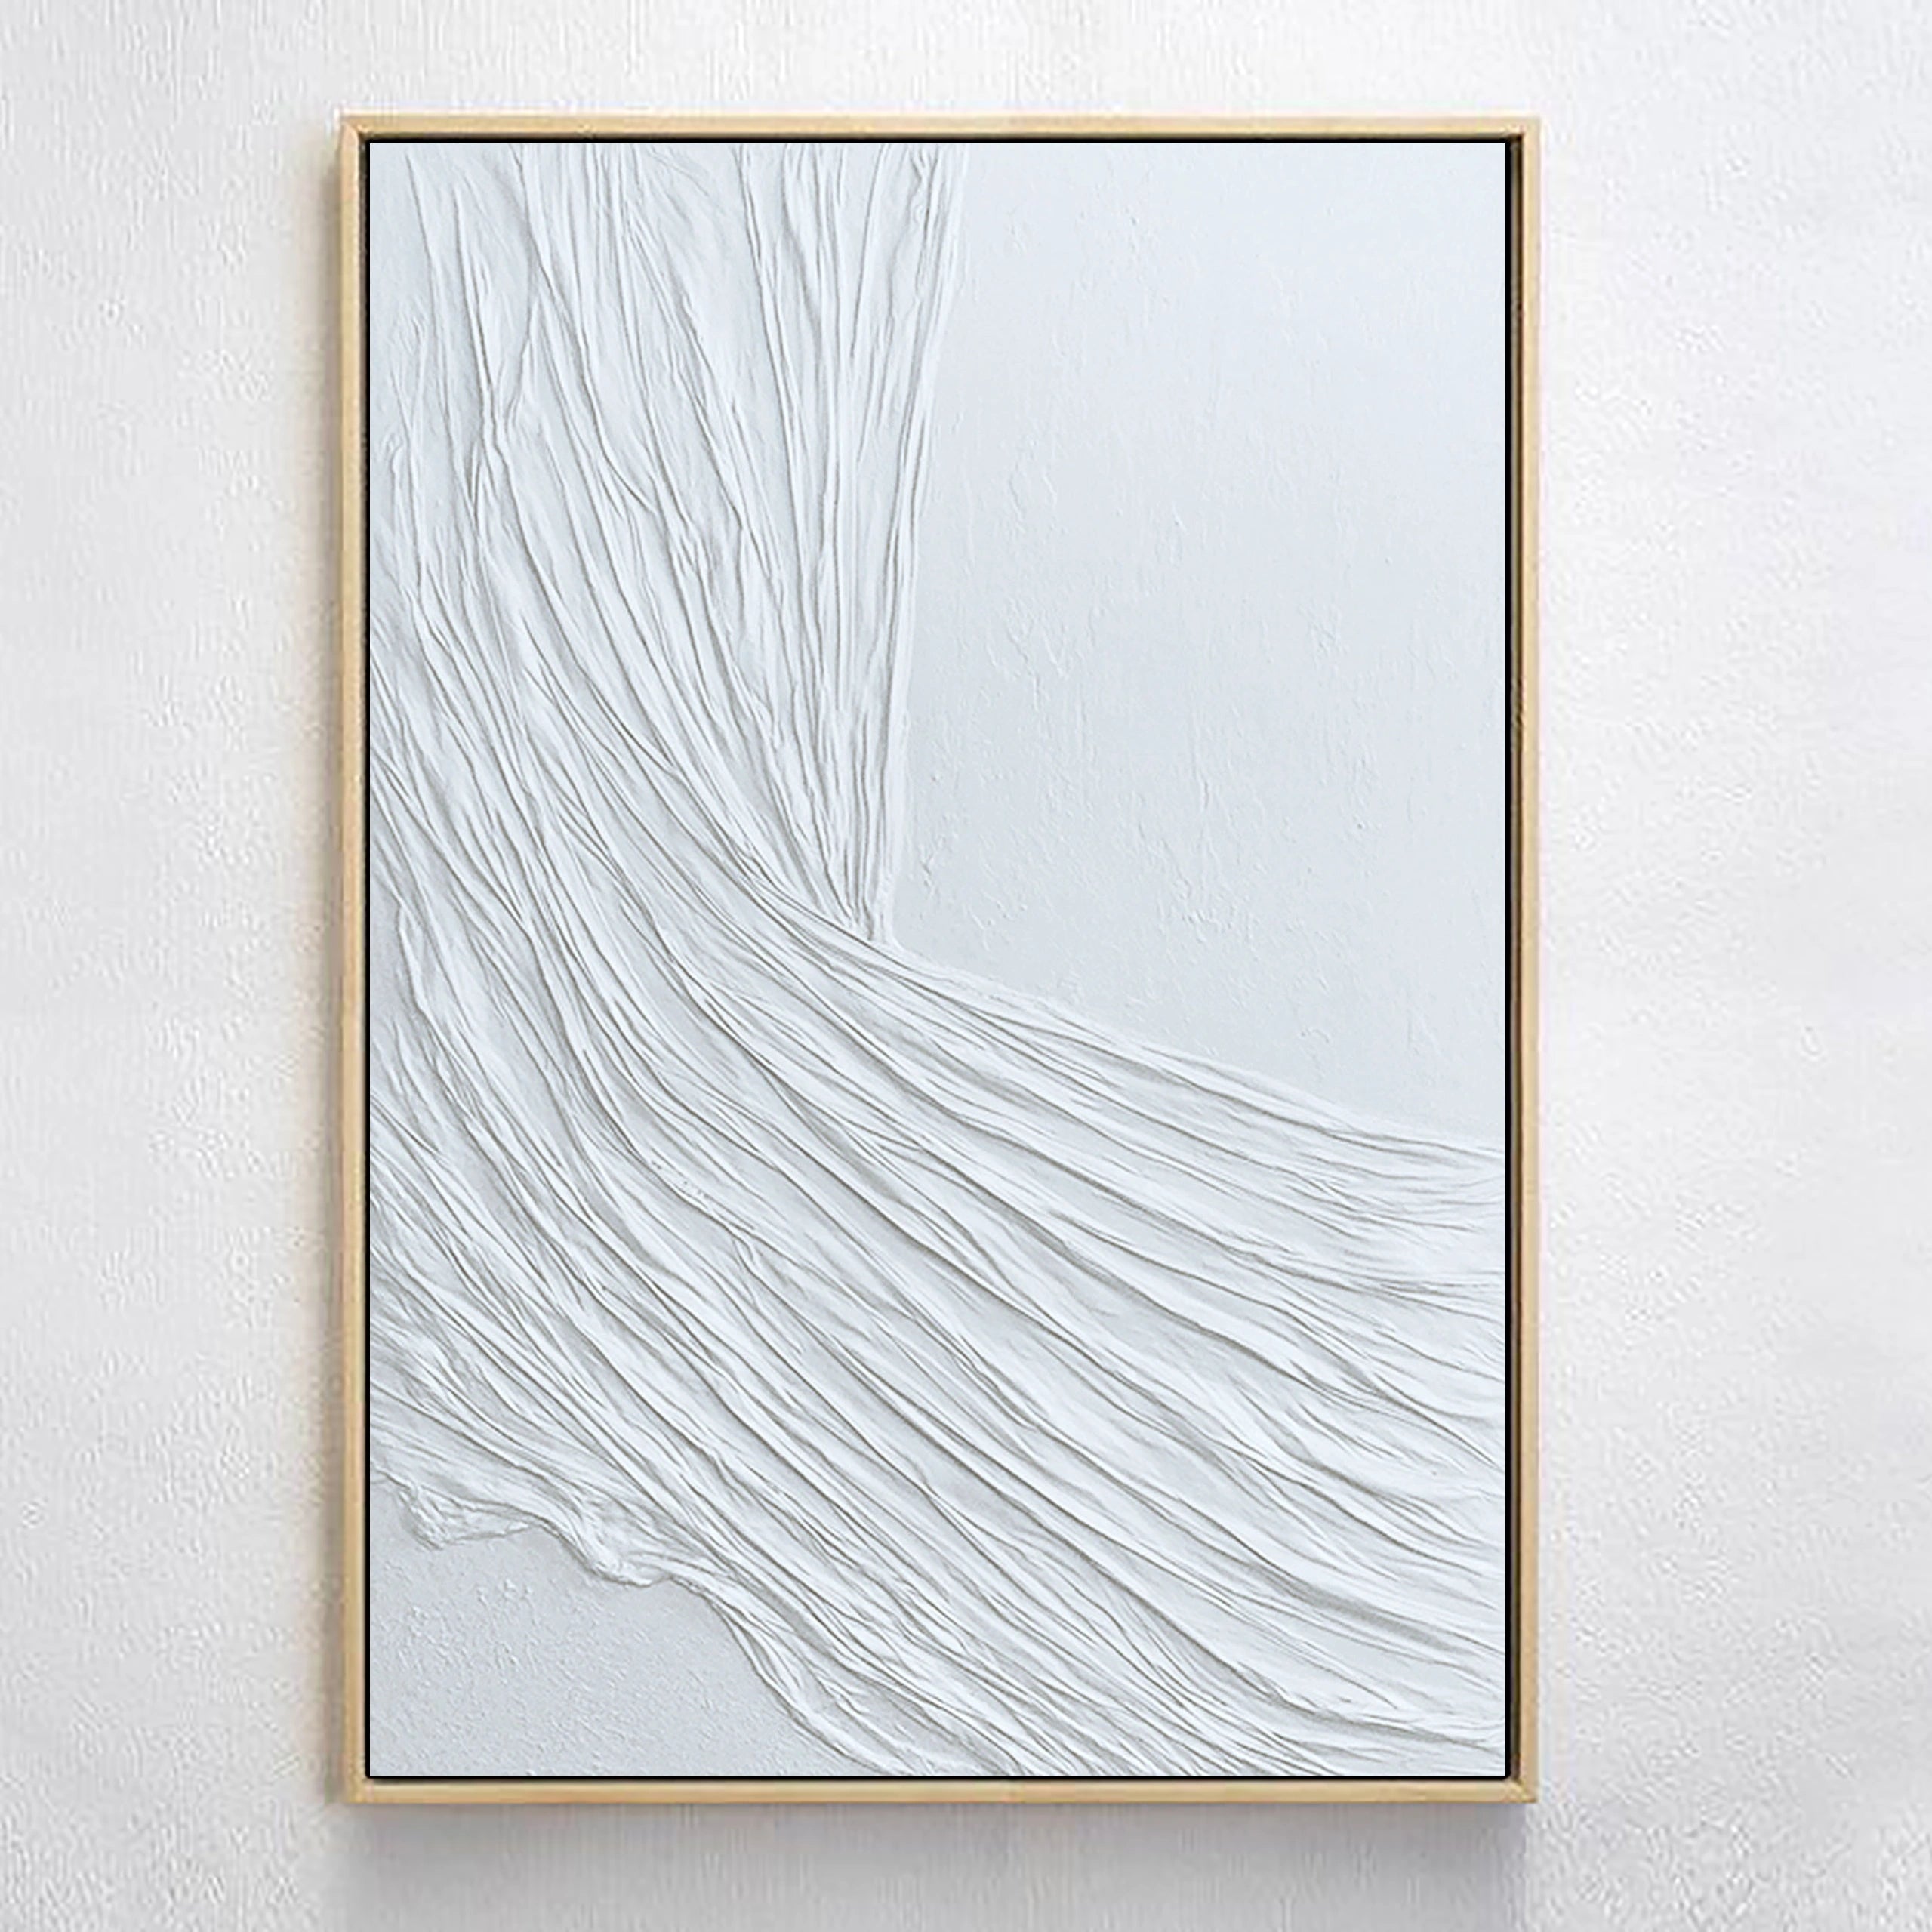 3D Textured White Minimalistic Plaster Painting on Canvas Original